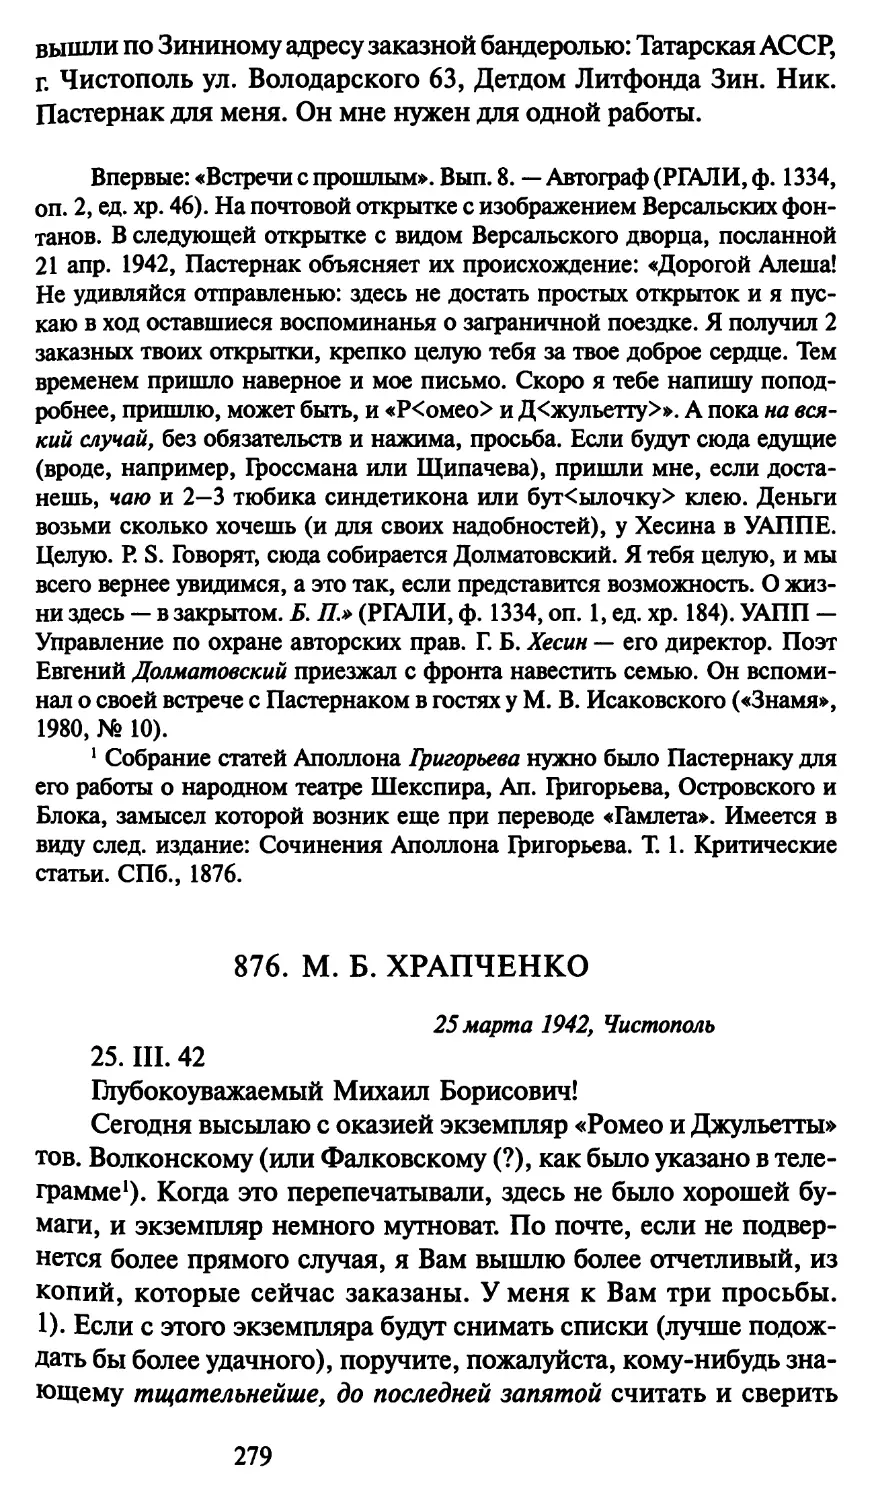 876. М. Б. Храпченко 25 марта 1942